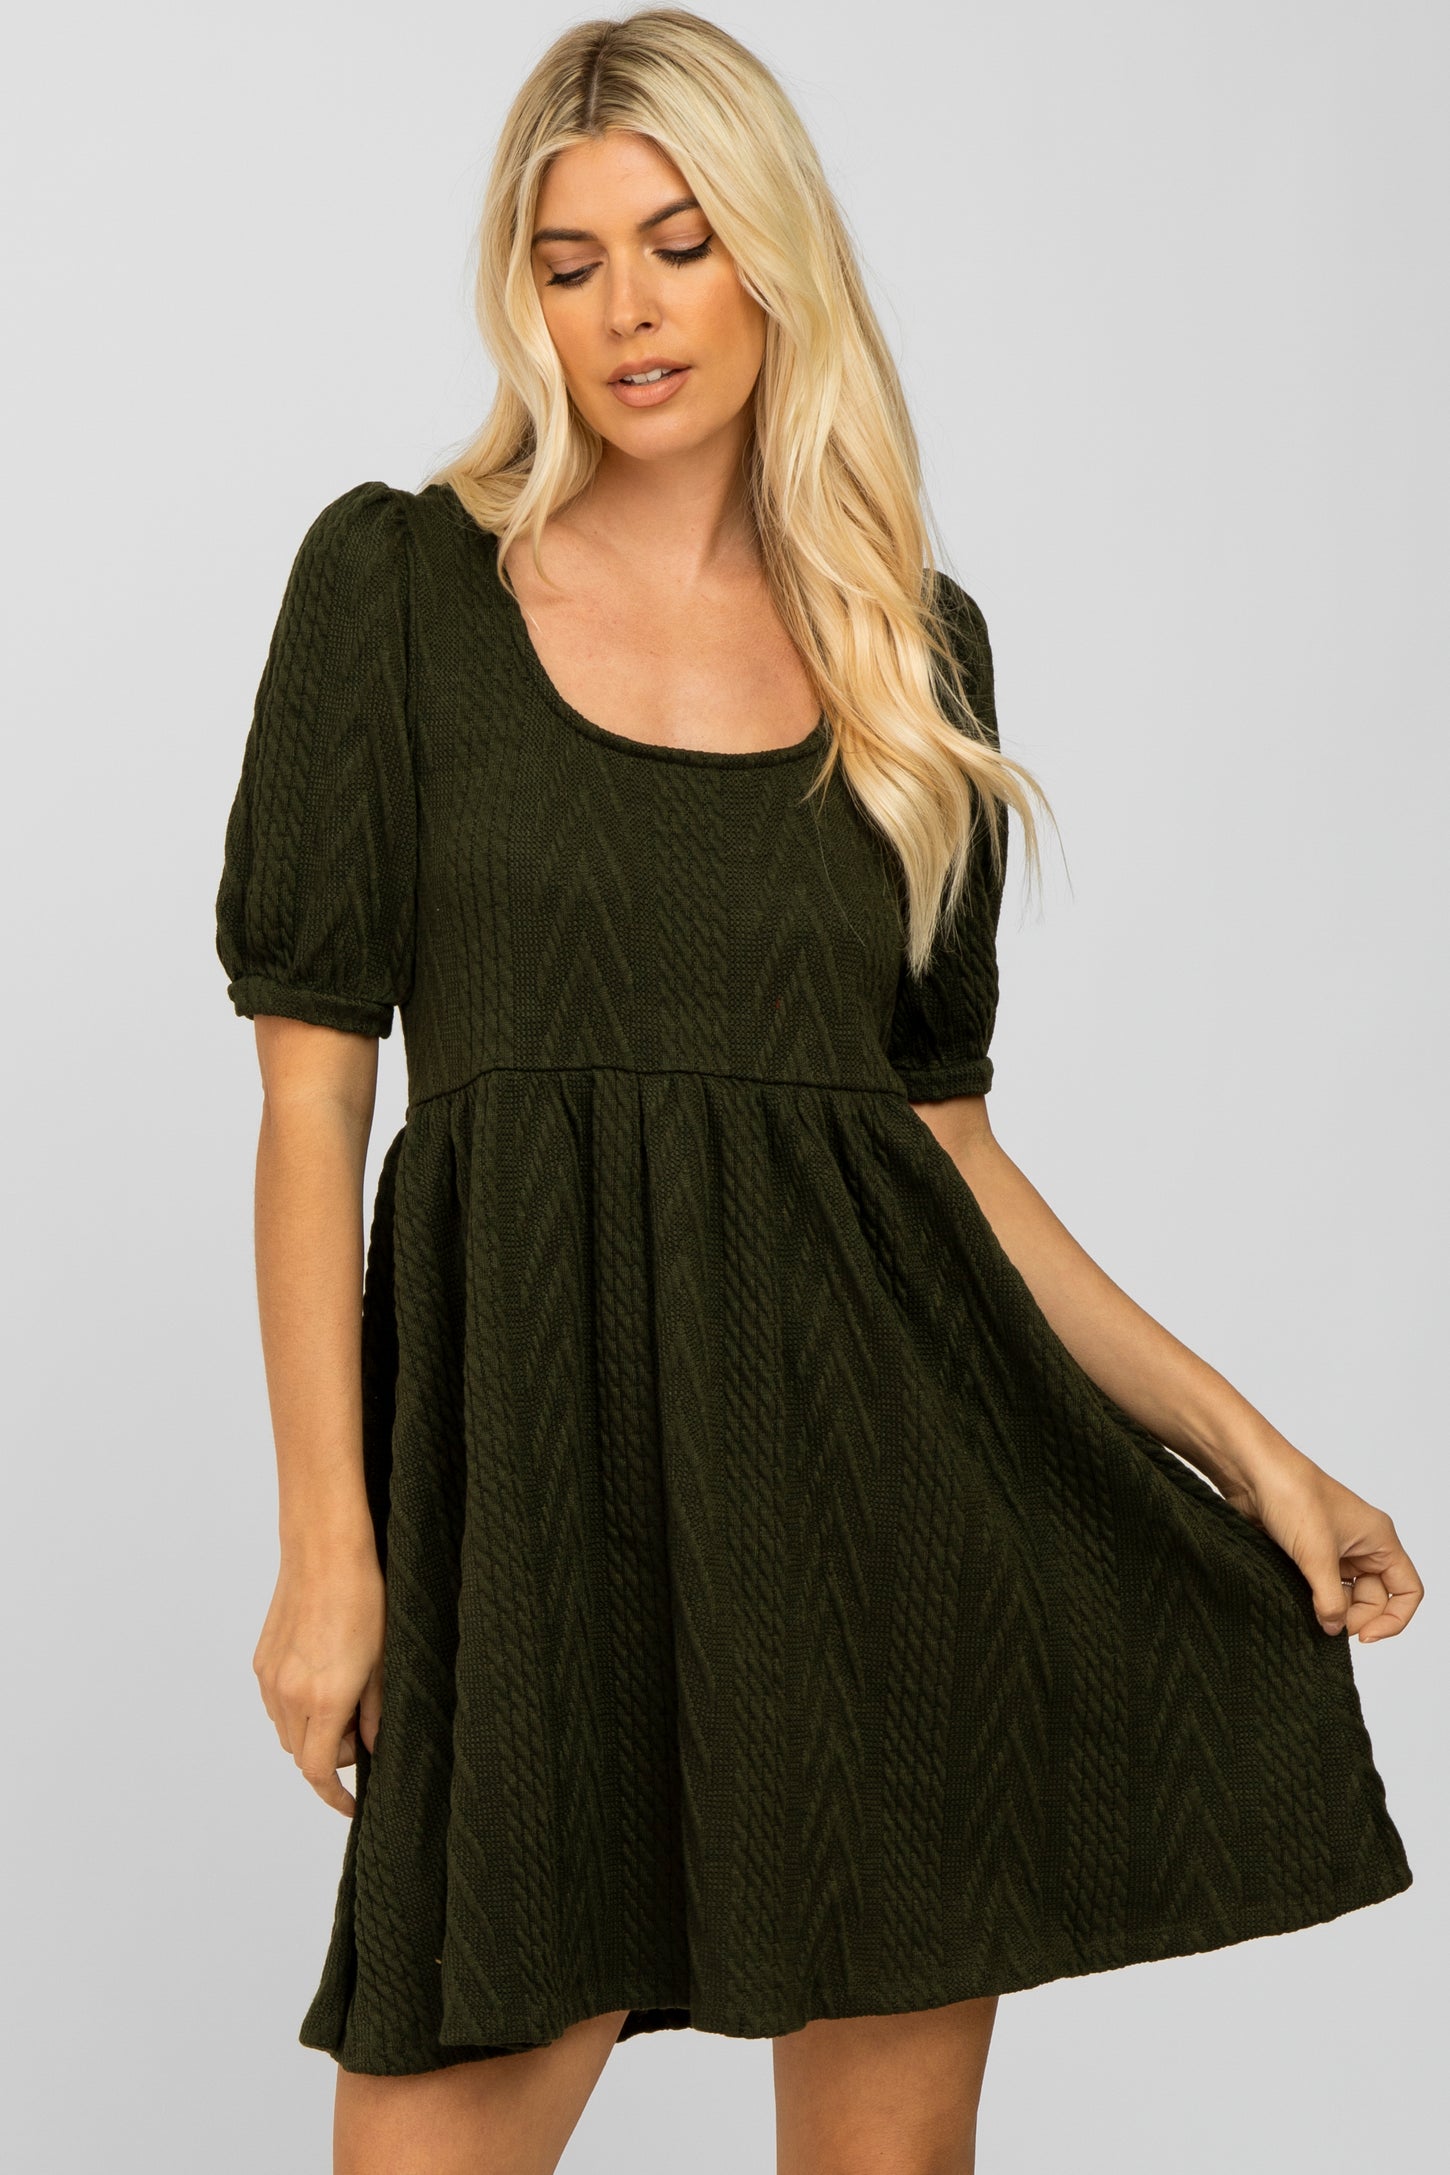 Olive Contrast Knit Sweater Dress